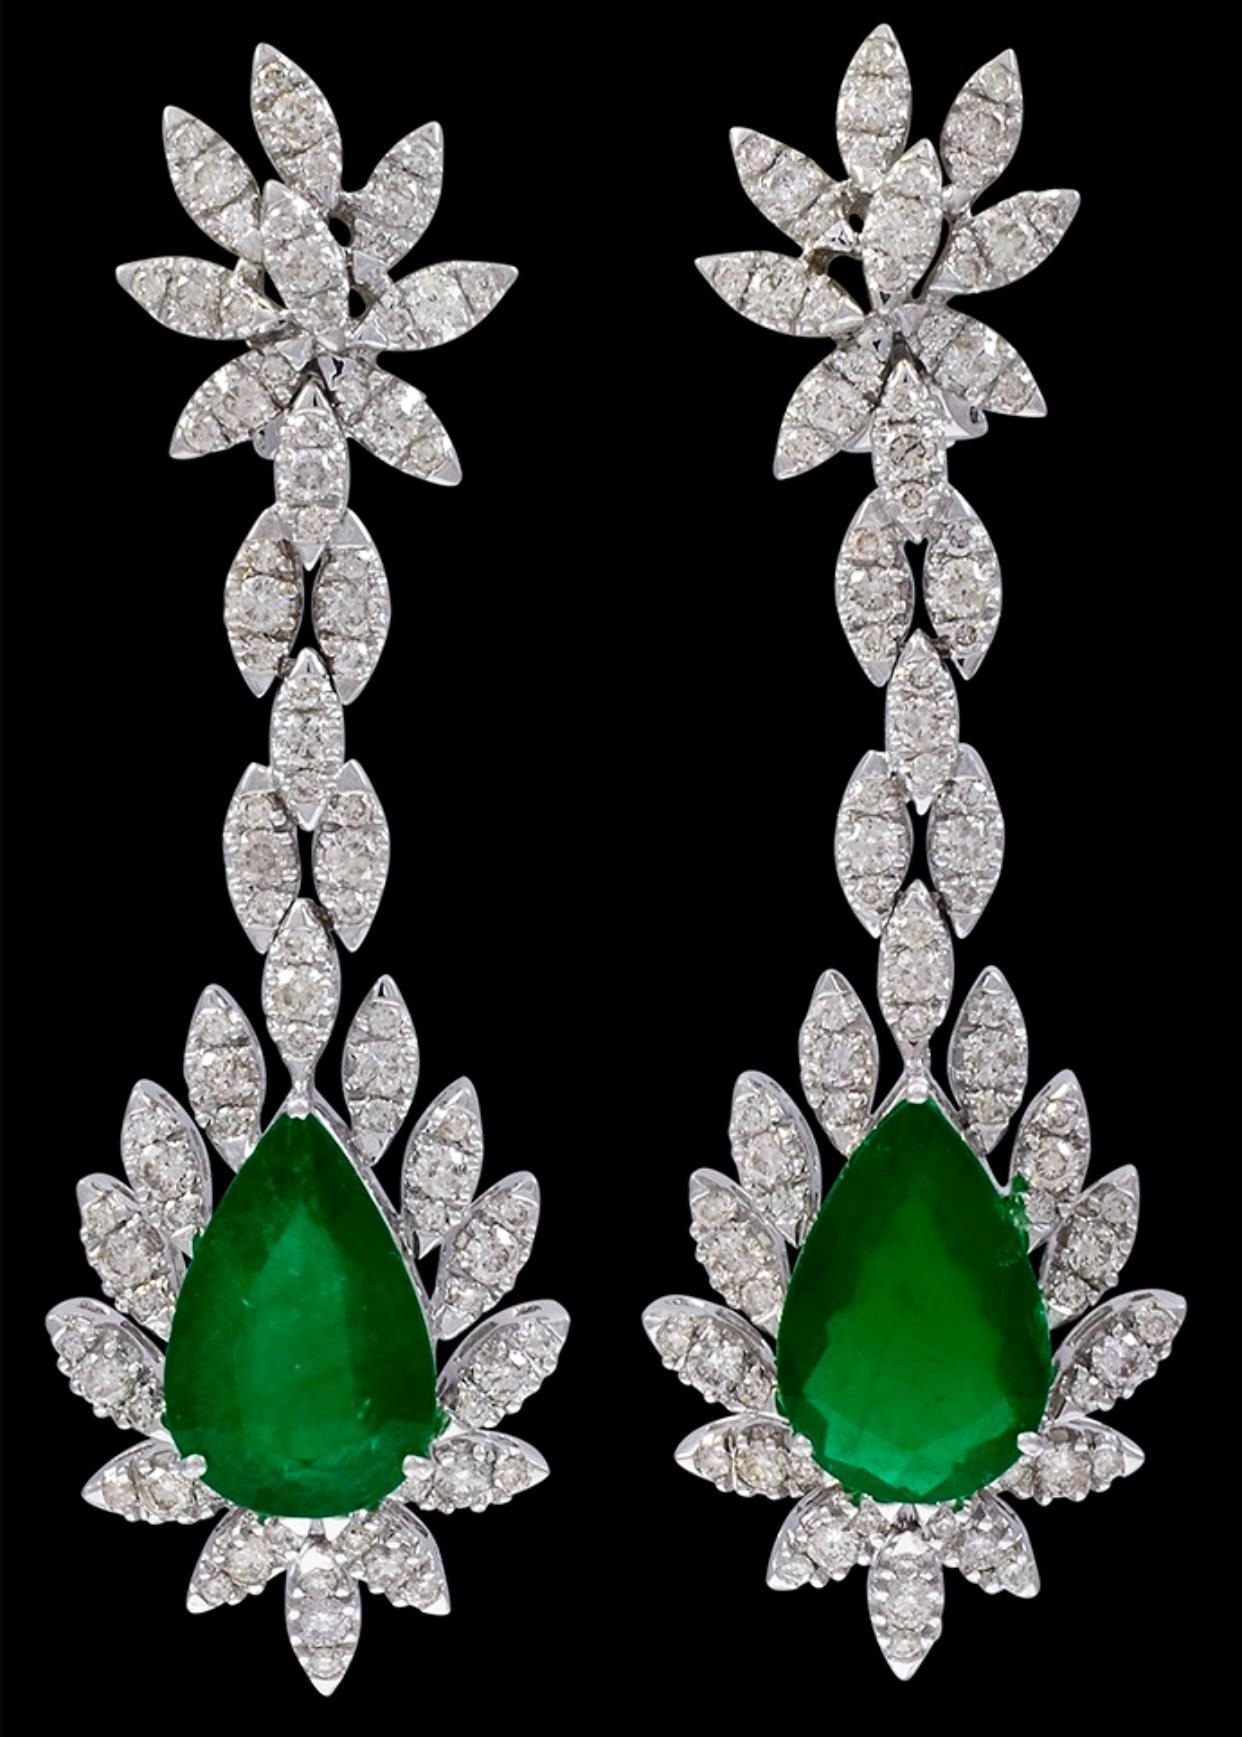 15 Carat Pear Shape Emerald Diamond Hanging/Drop Earrings 18 Karat White Gold For Sale 2